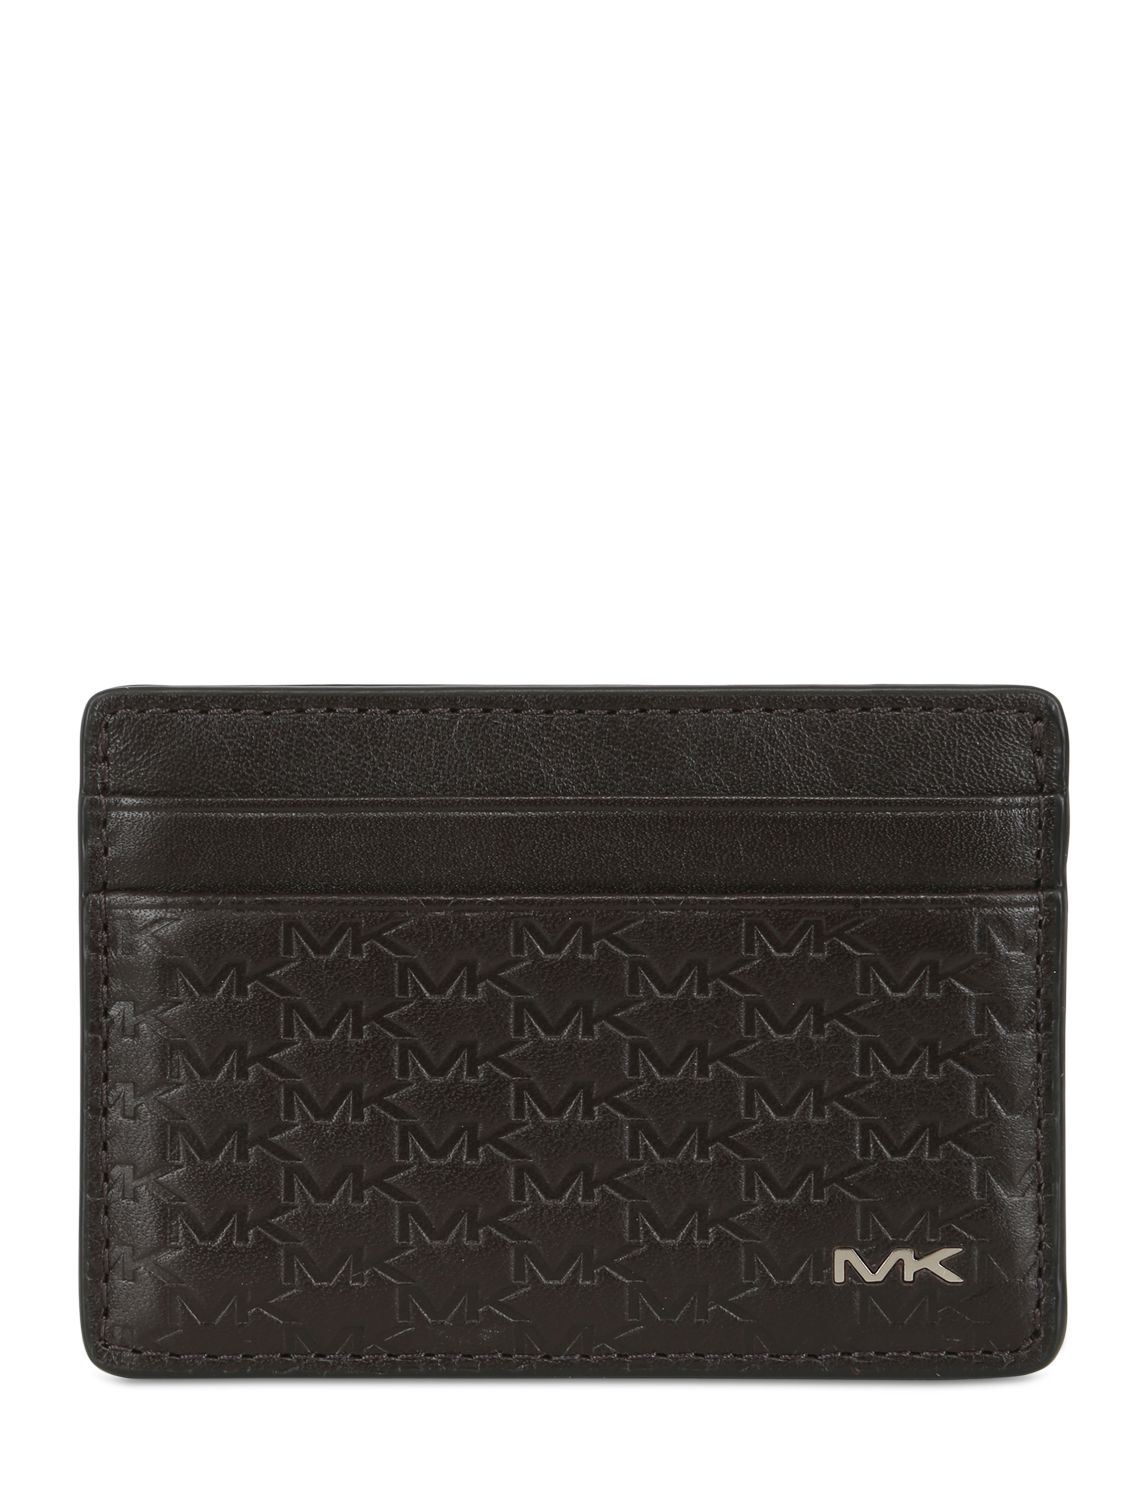 michael kors wallet card holder